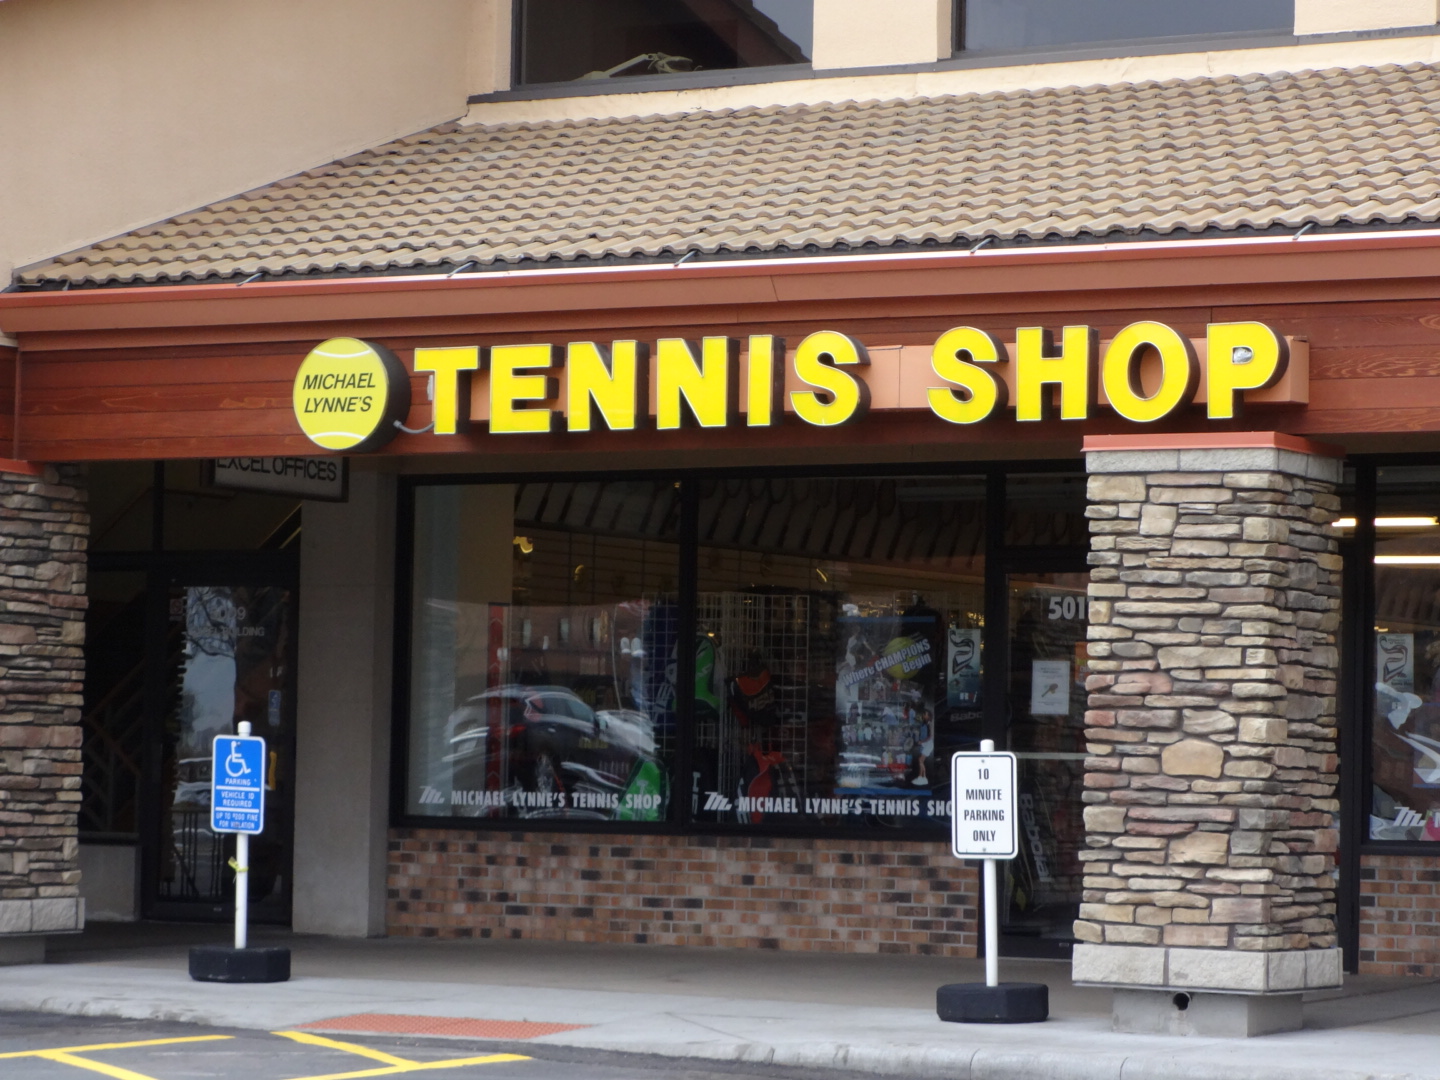 Tennis shop